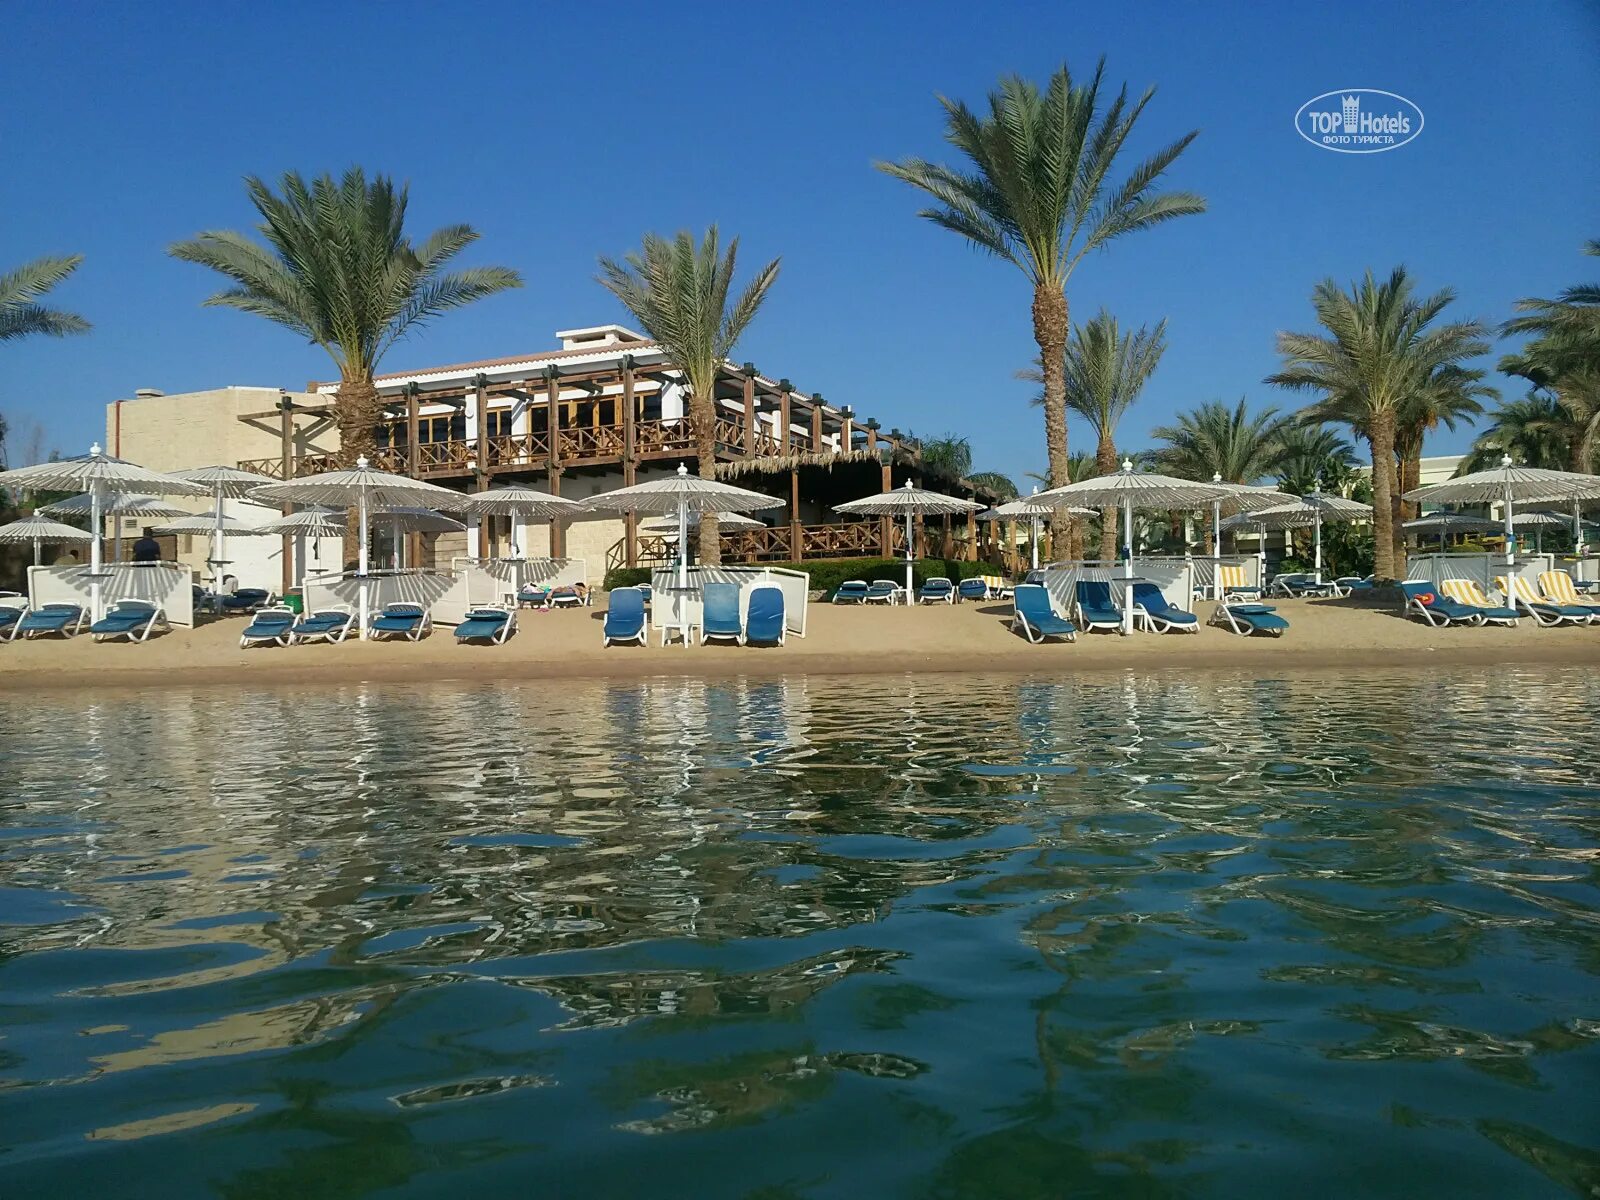 Хургада hurghada swiss inn hurghada. Отель Swiss Inn Resort Hurghada. Swiss Inn Hurghada 5 Хургада. Свисс ИНН Резорт Хургада 5.